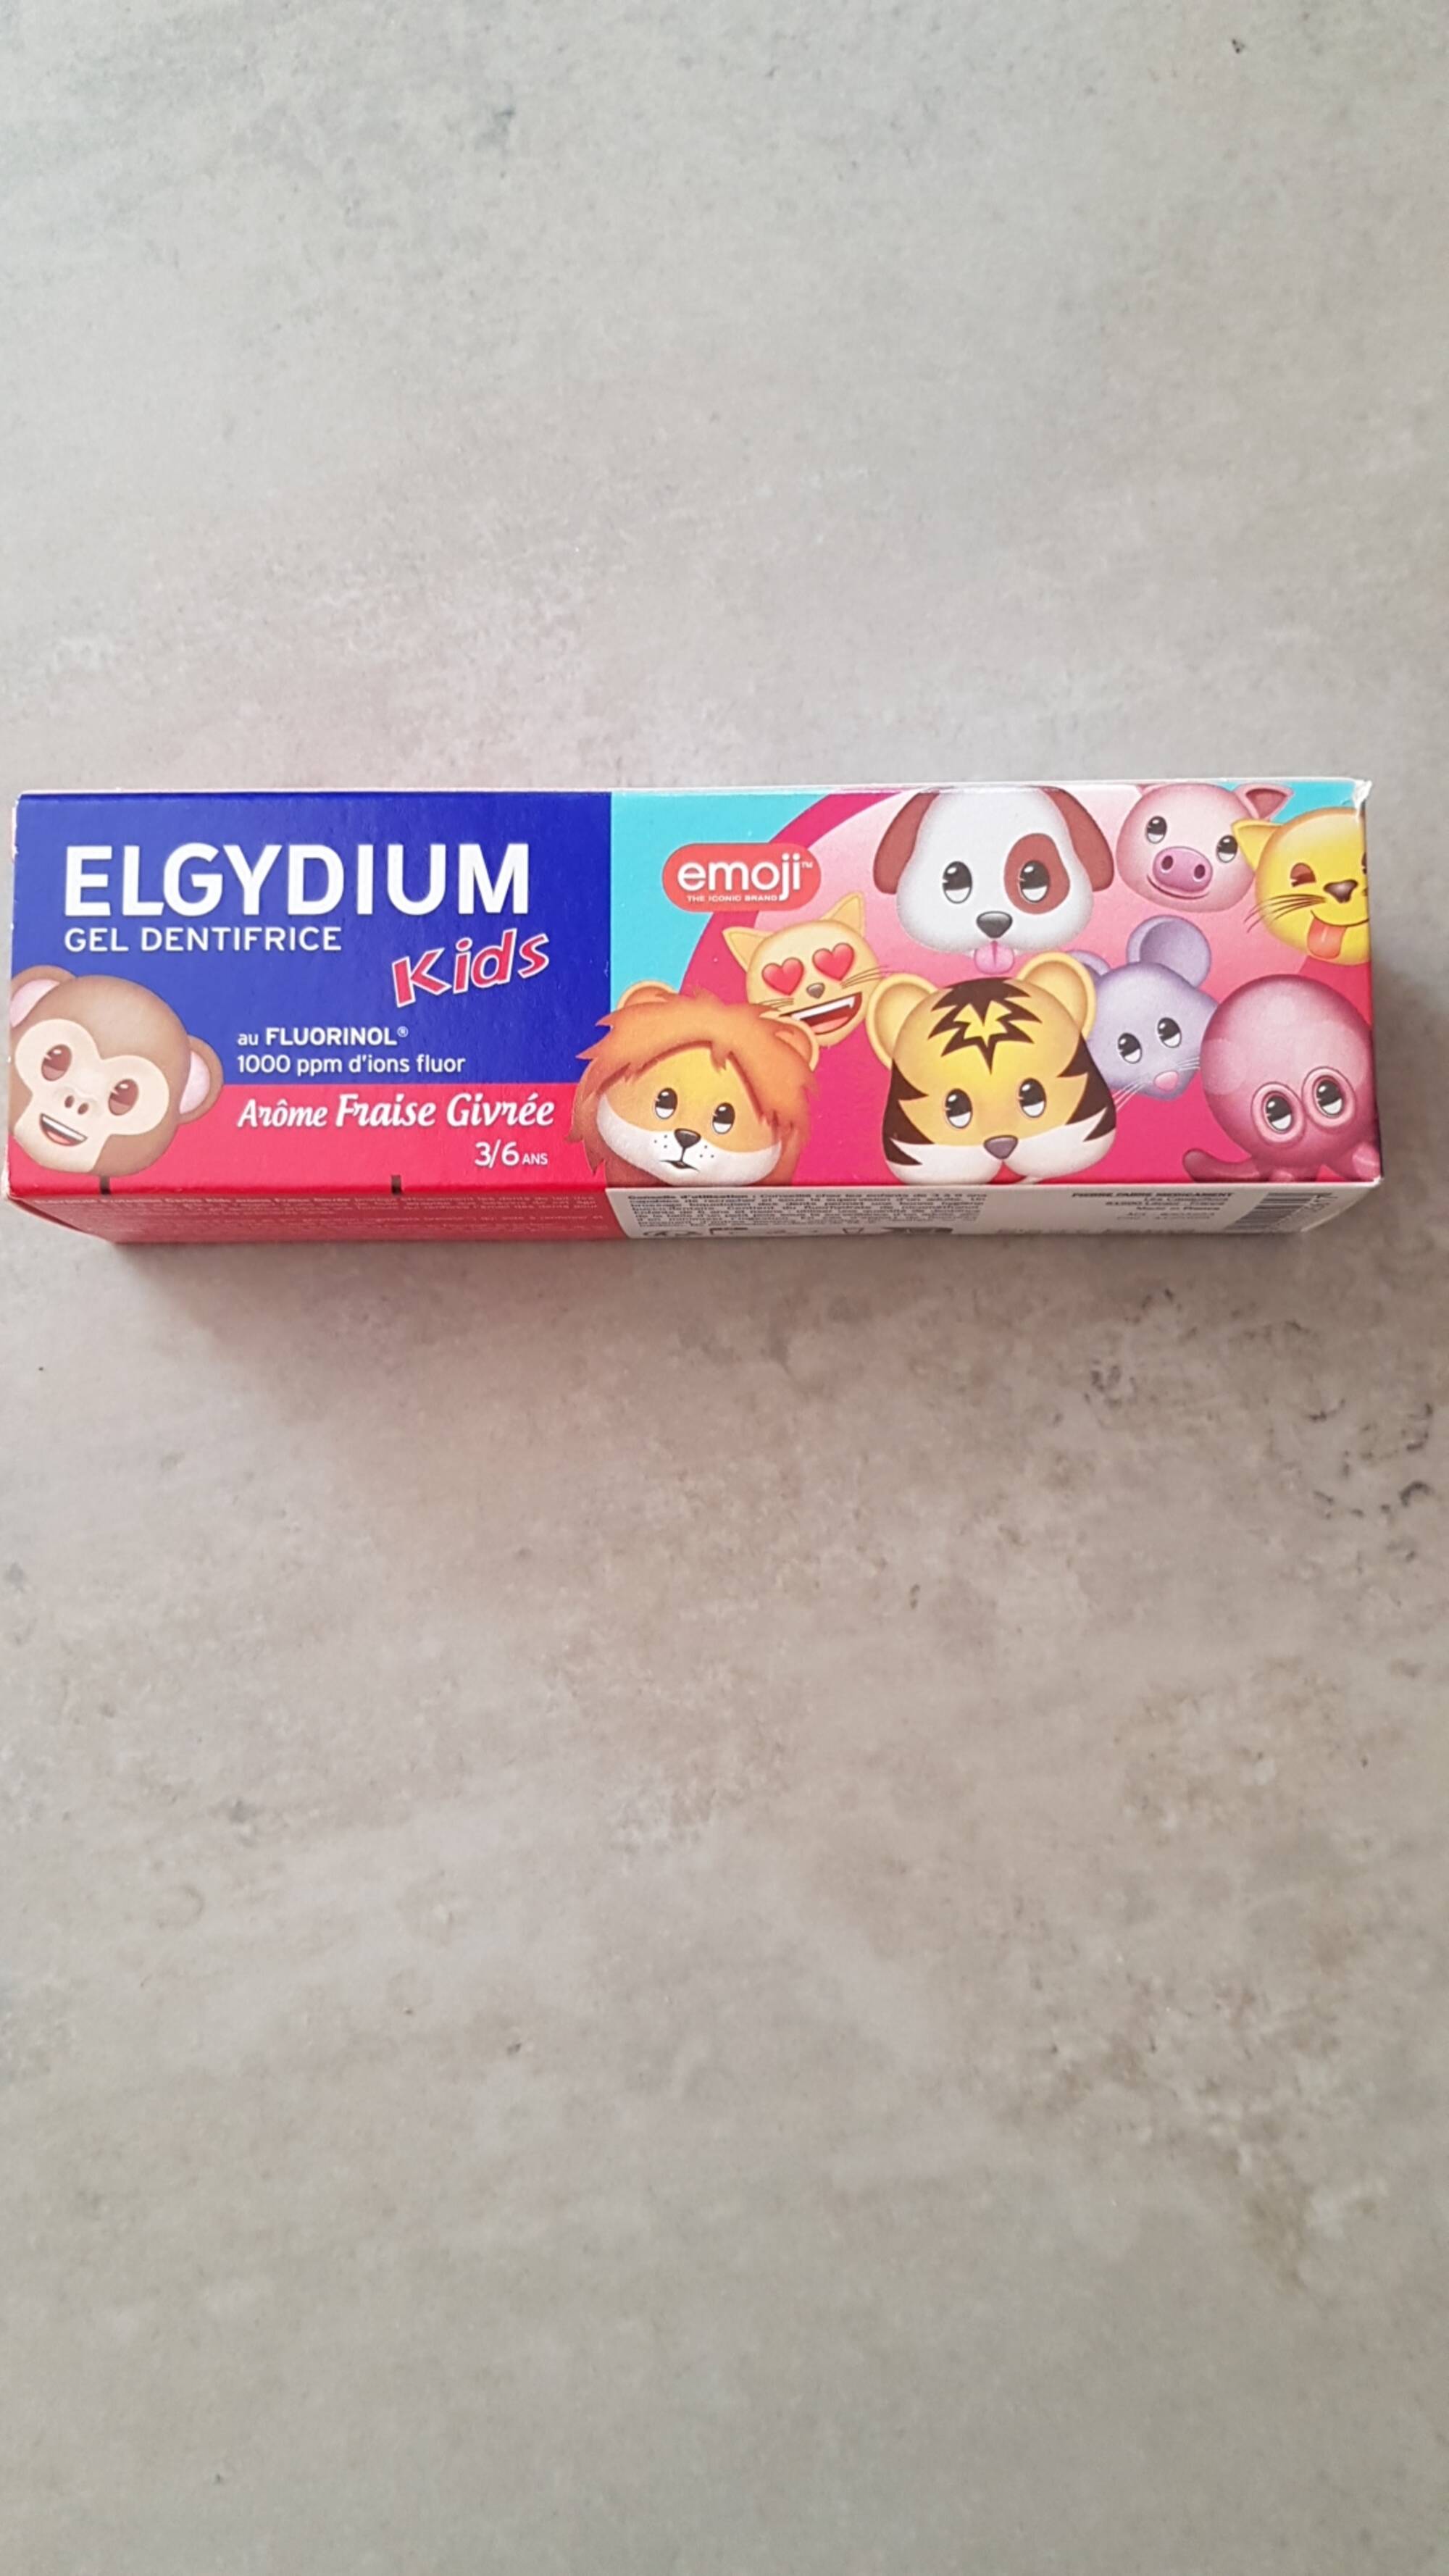 ELGYDIUM - Gel dentifrice kids